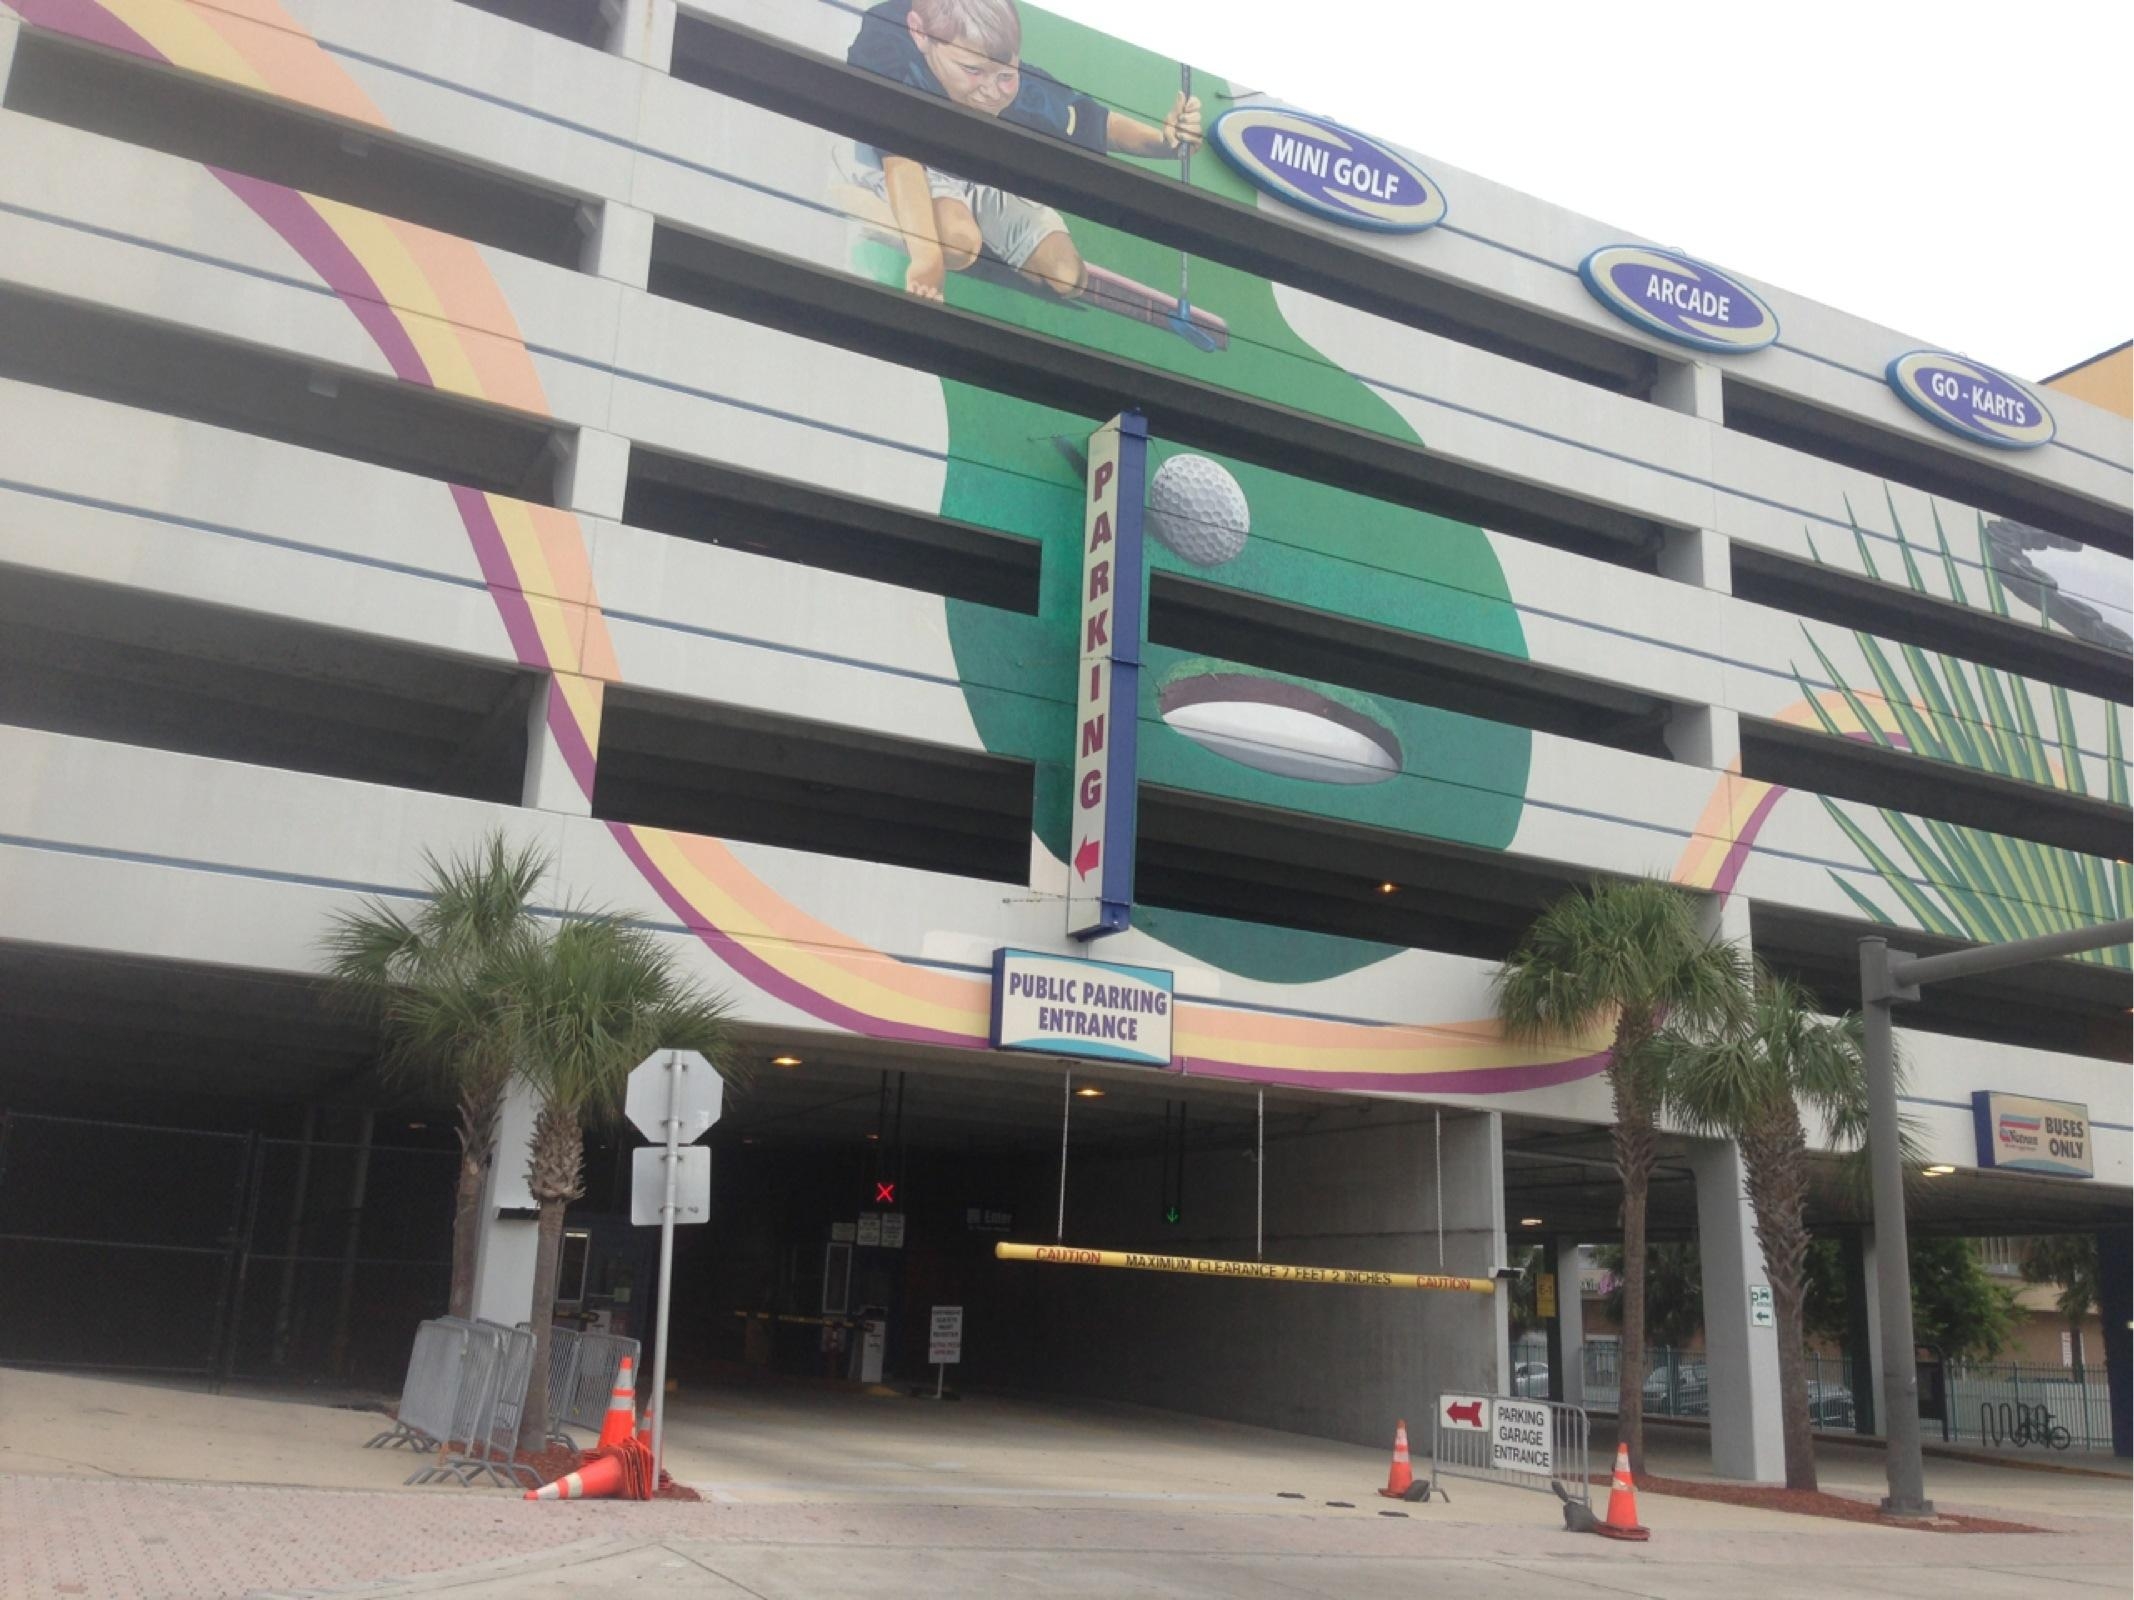 701 Earl St Garage - Parking in Daytona Beach